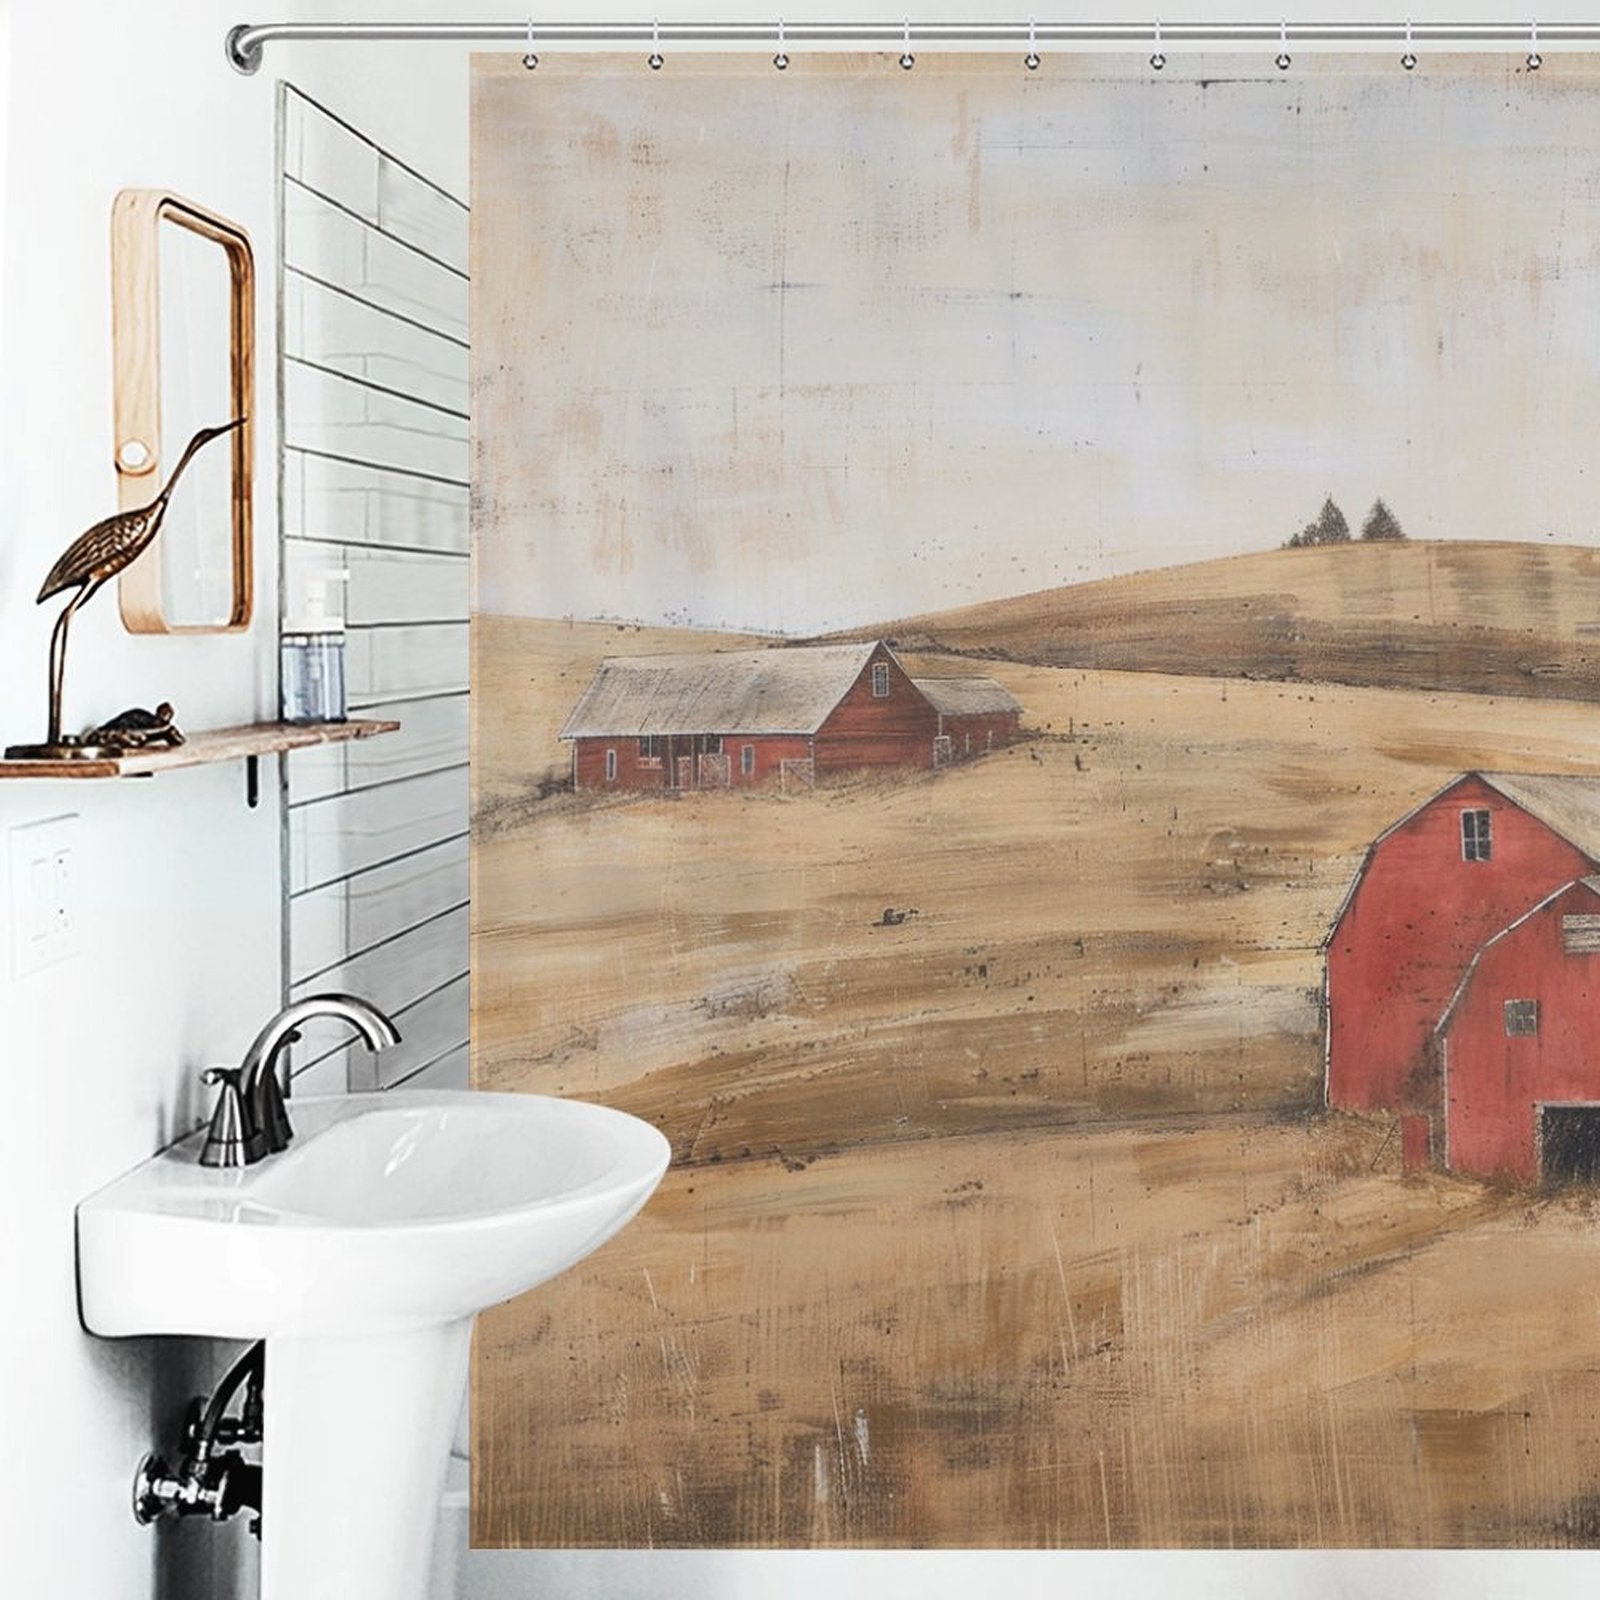 Rustic Charm Farmhouse Shower Curtain